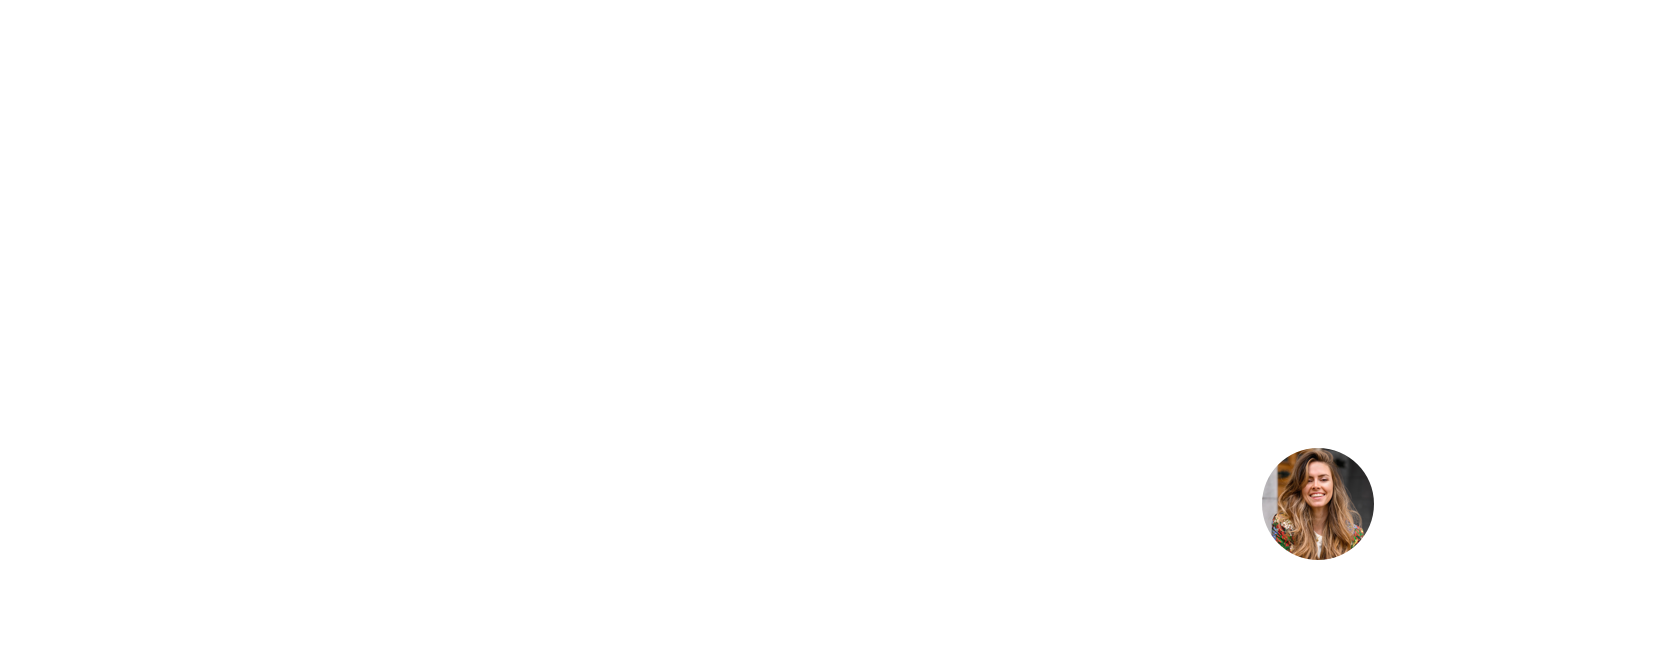 Testimonial The Self-Made Summit 2019 Business Carriere Event Ambitieuze Zakenvrouwen Freelancers Aranka van der Voorden.png